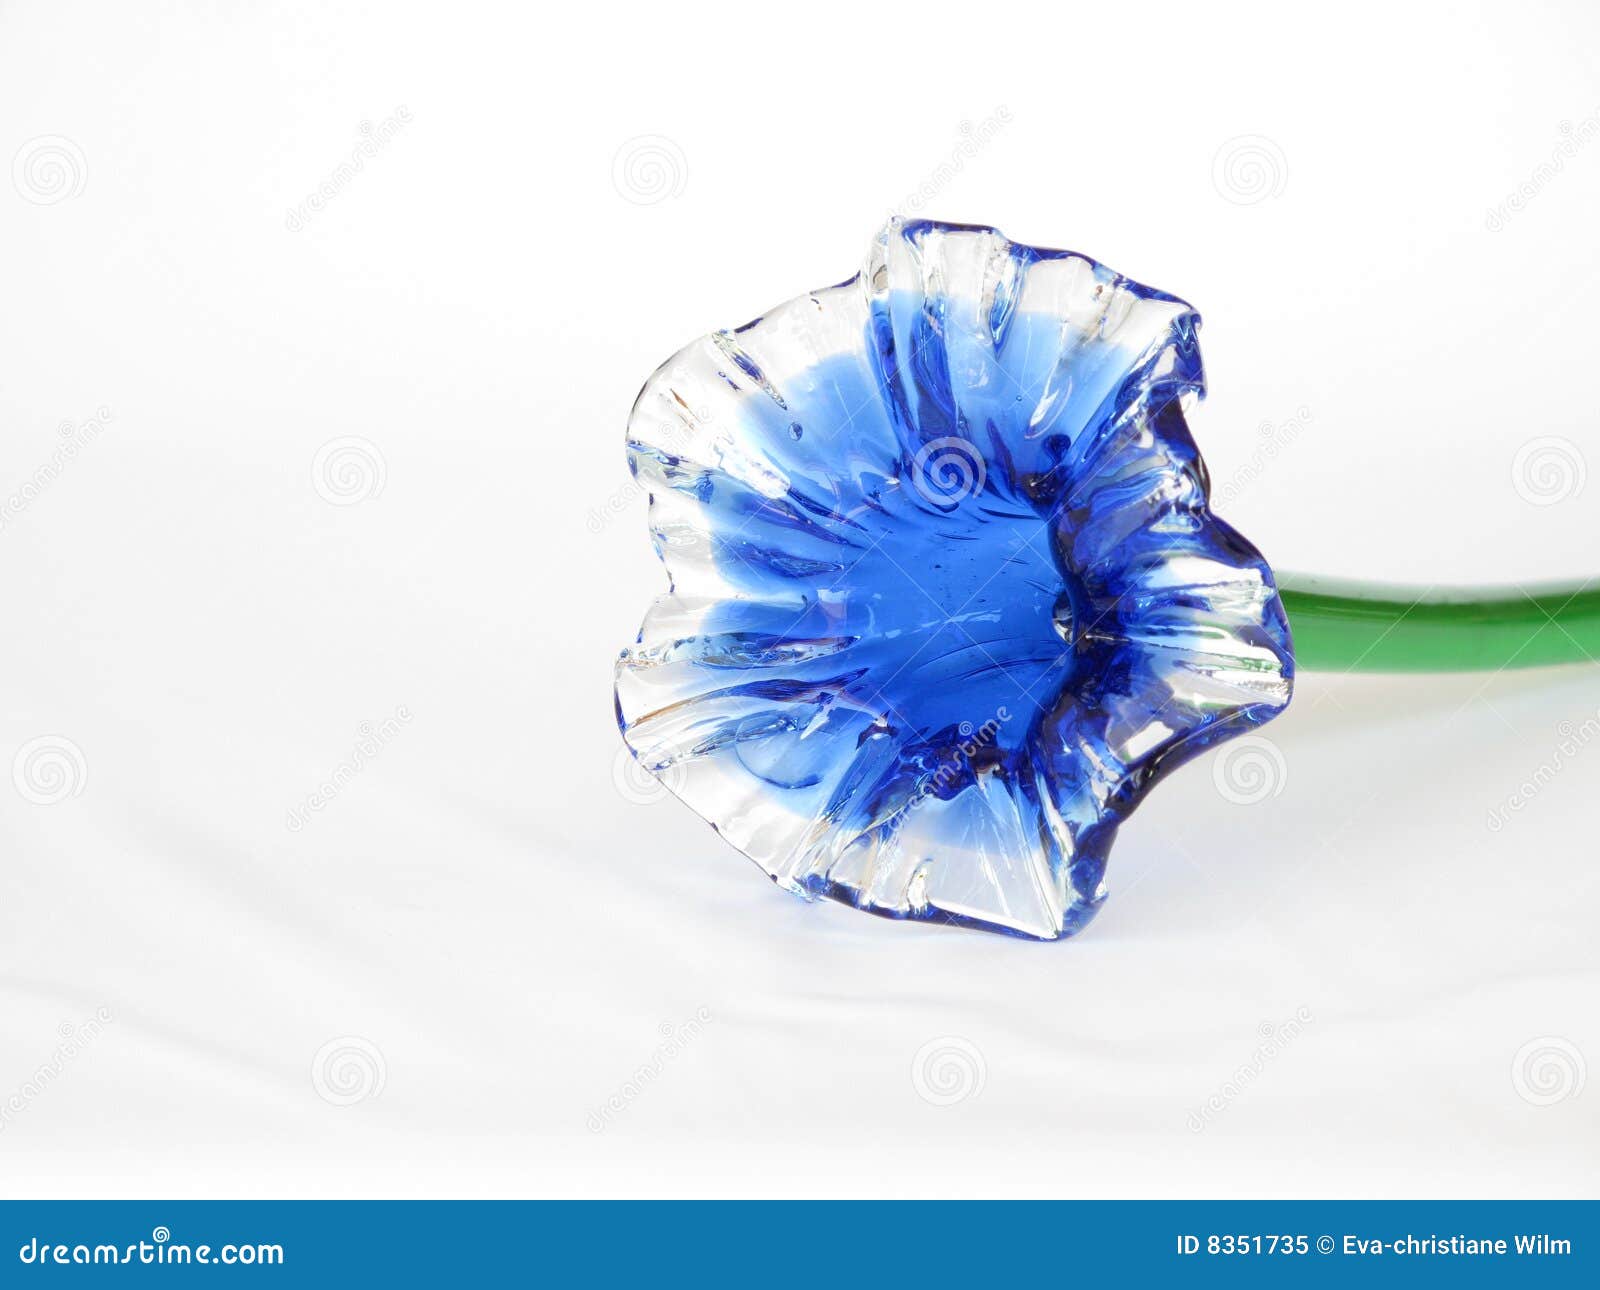 blue glass calyx flower